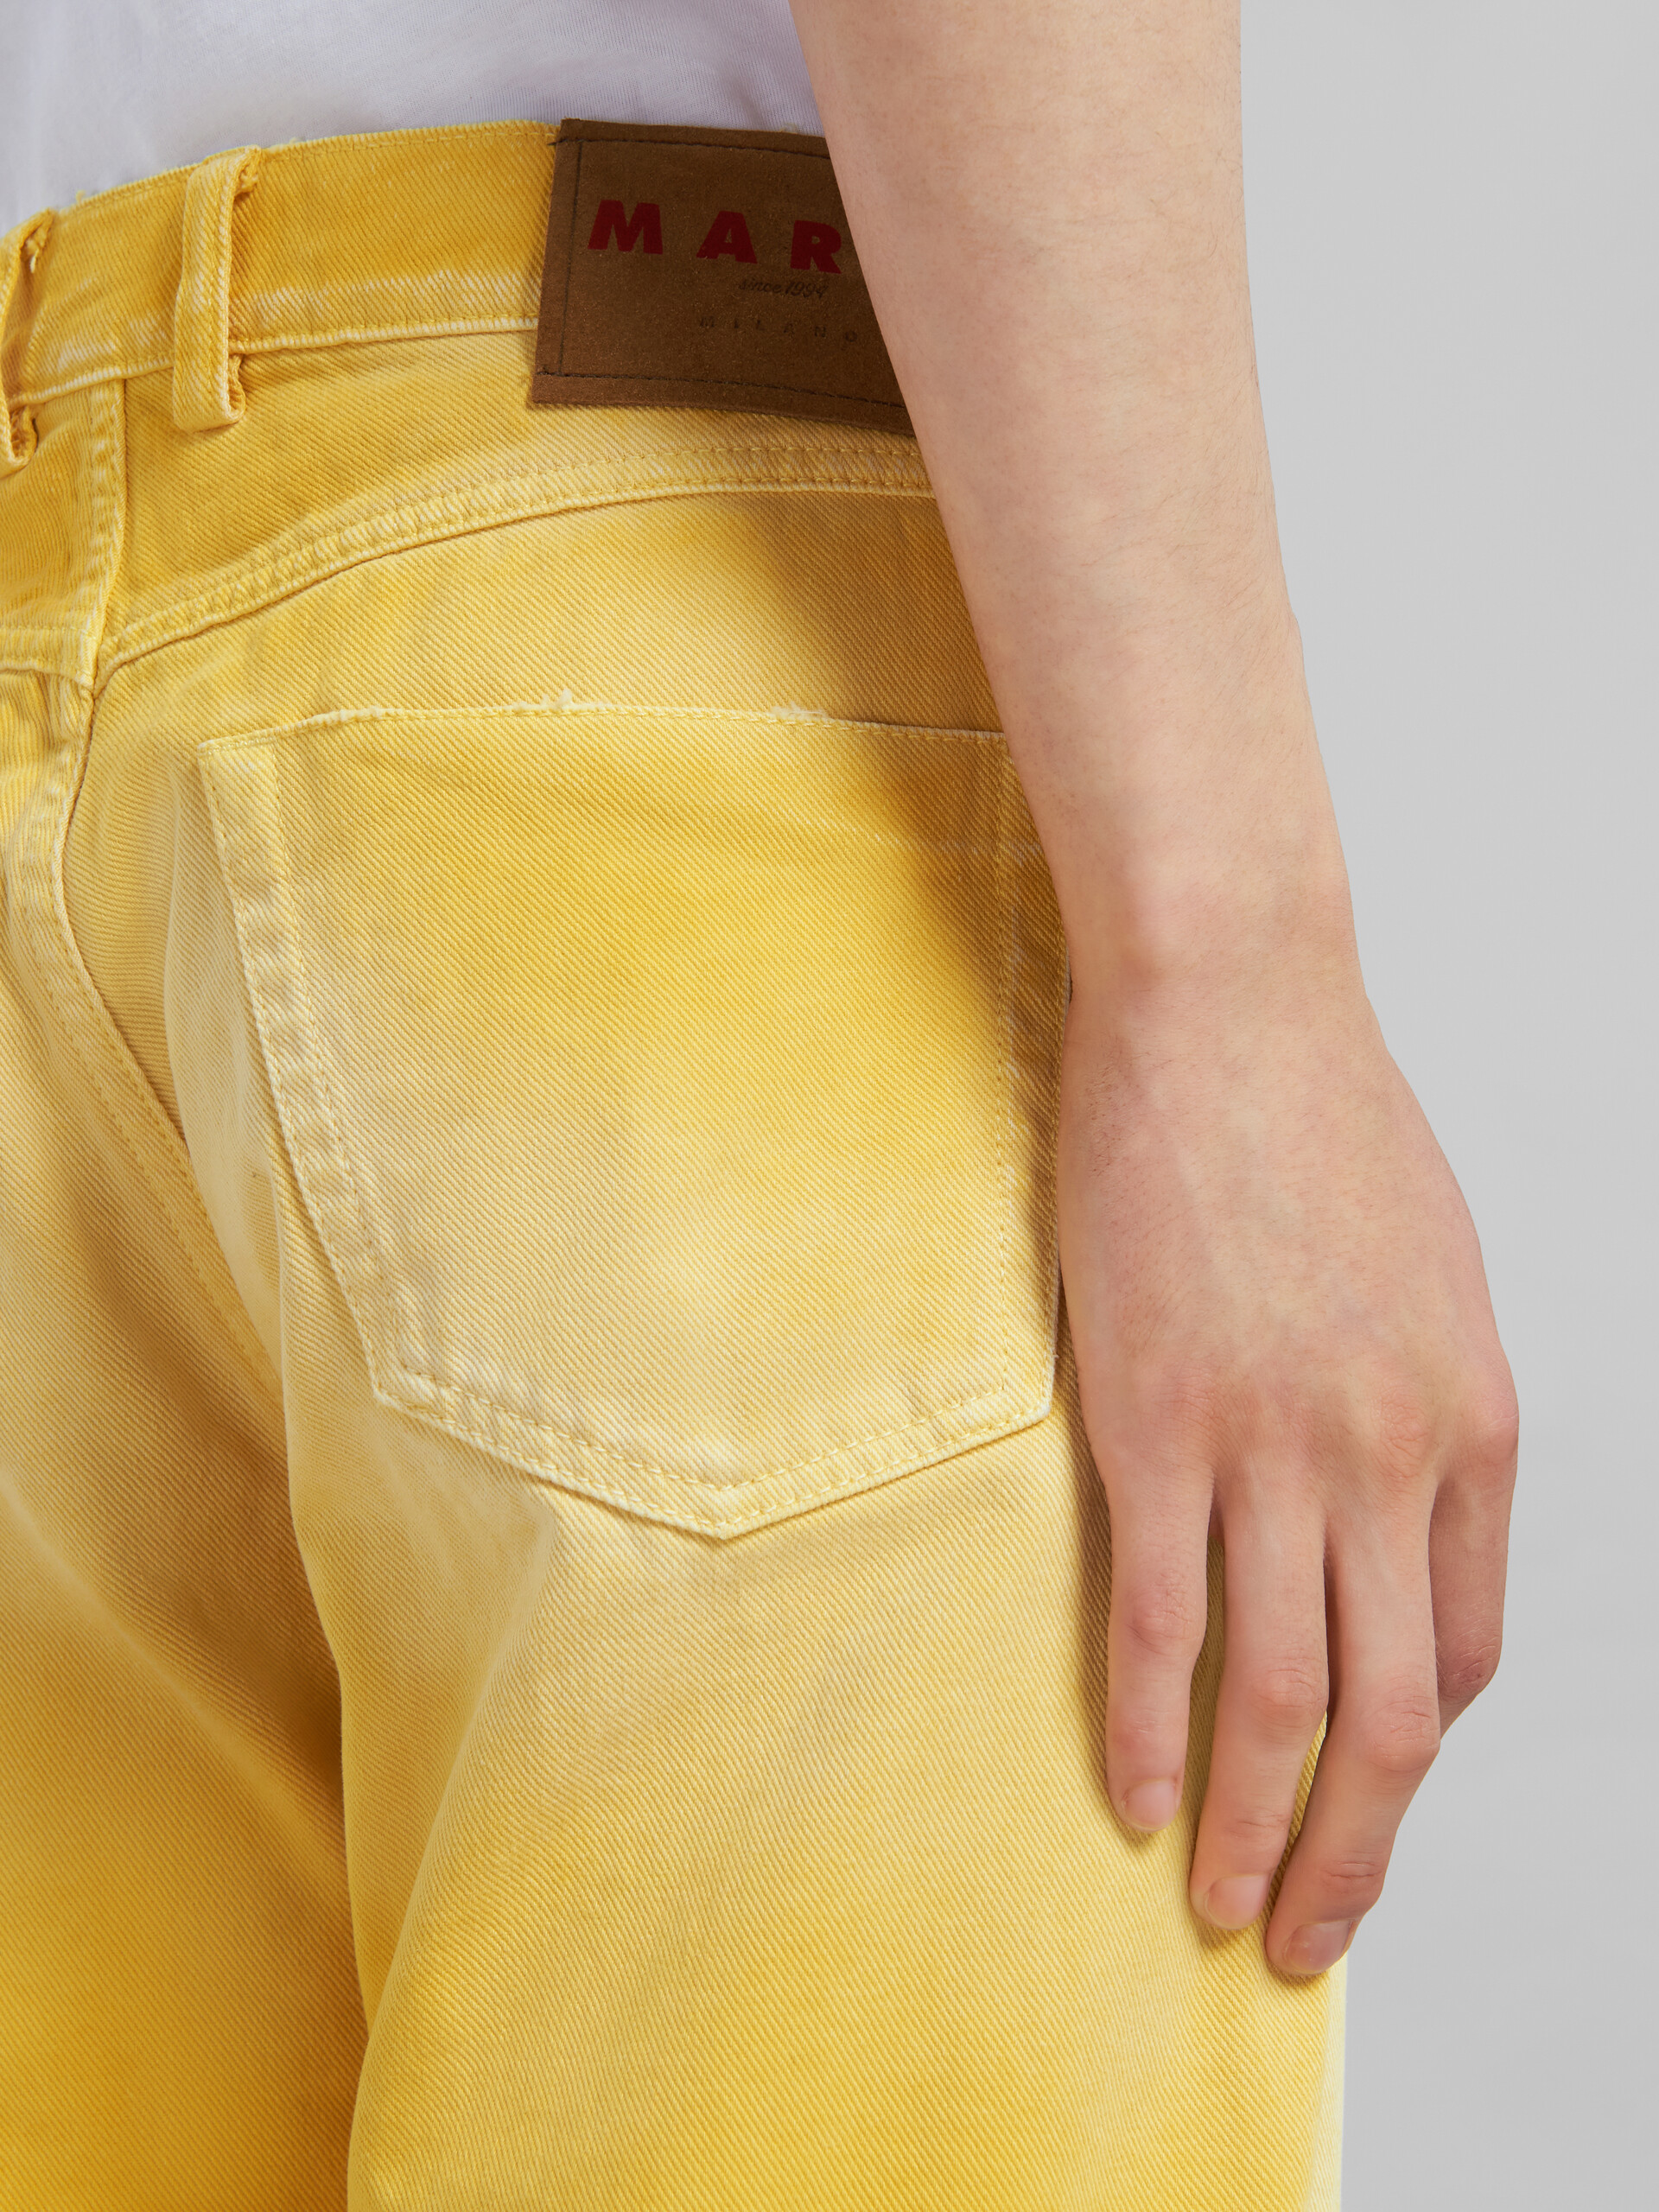 Pantalón de pernera recta amarillo de bull denim sobreteñido - Pantalones - Image 4